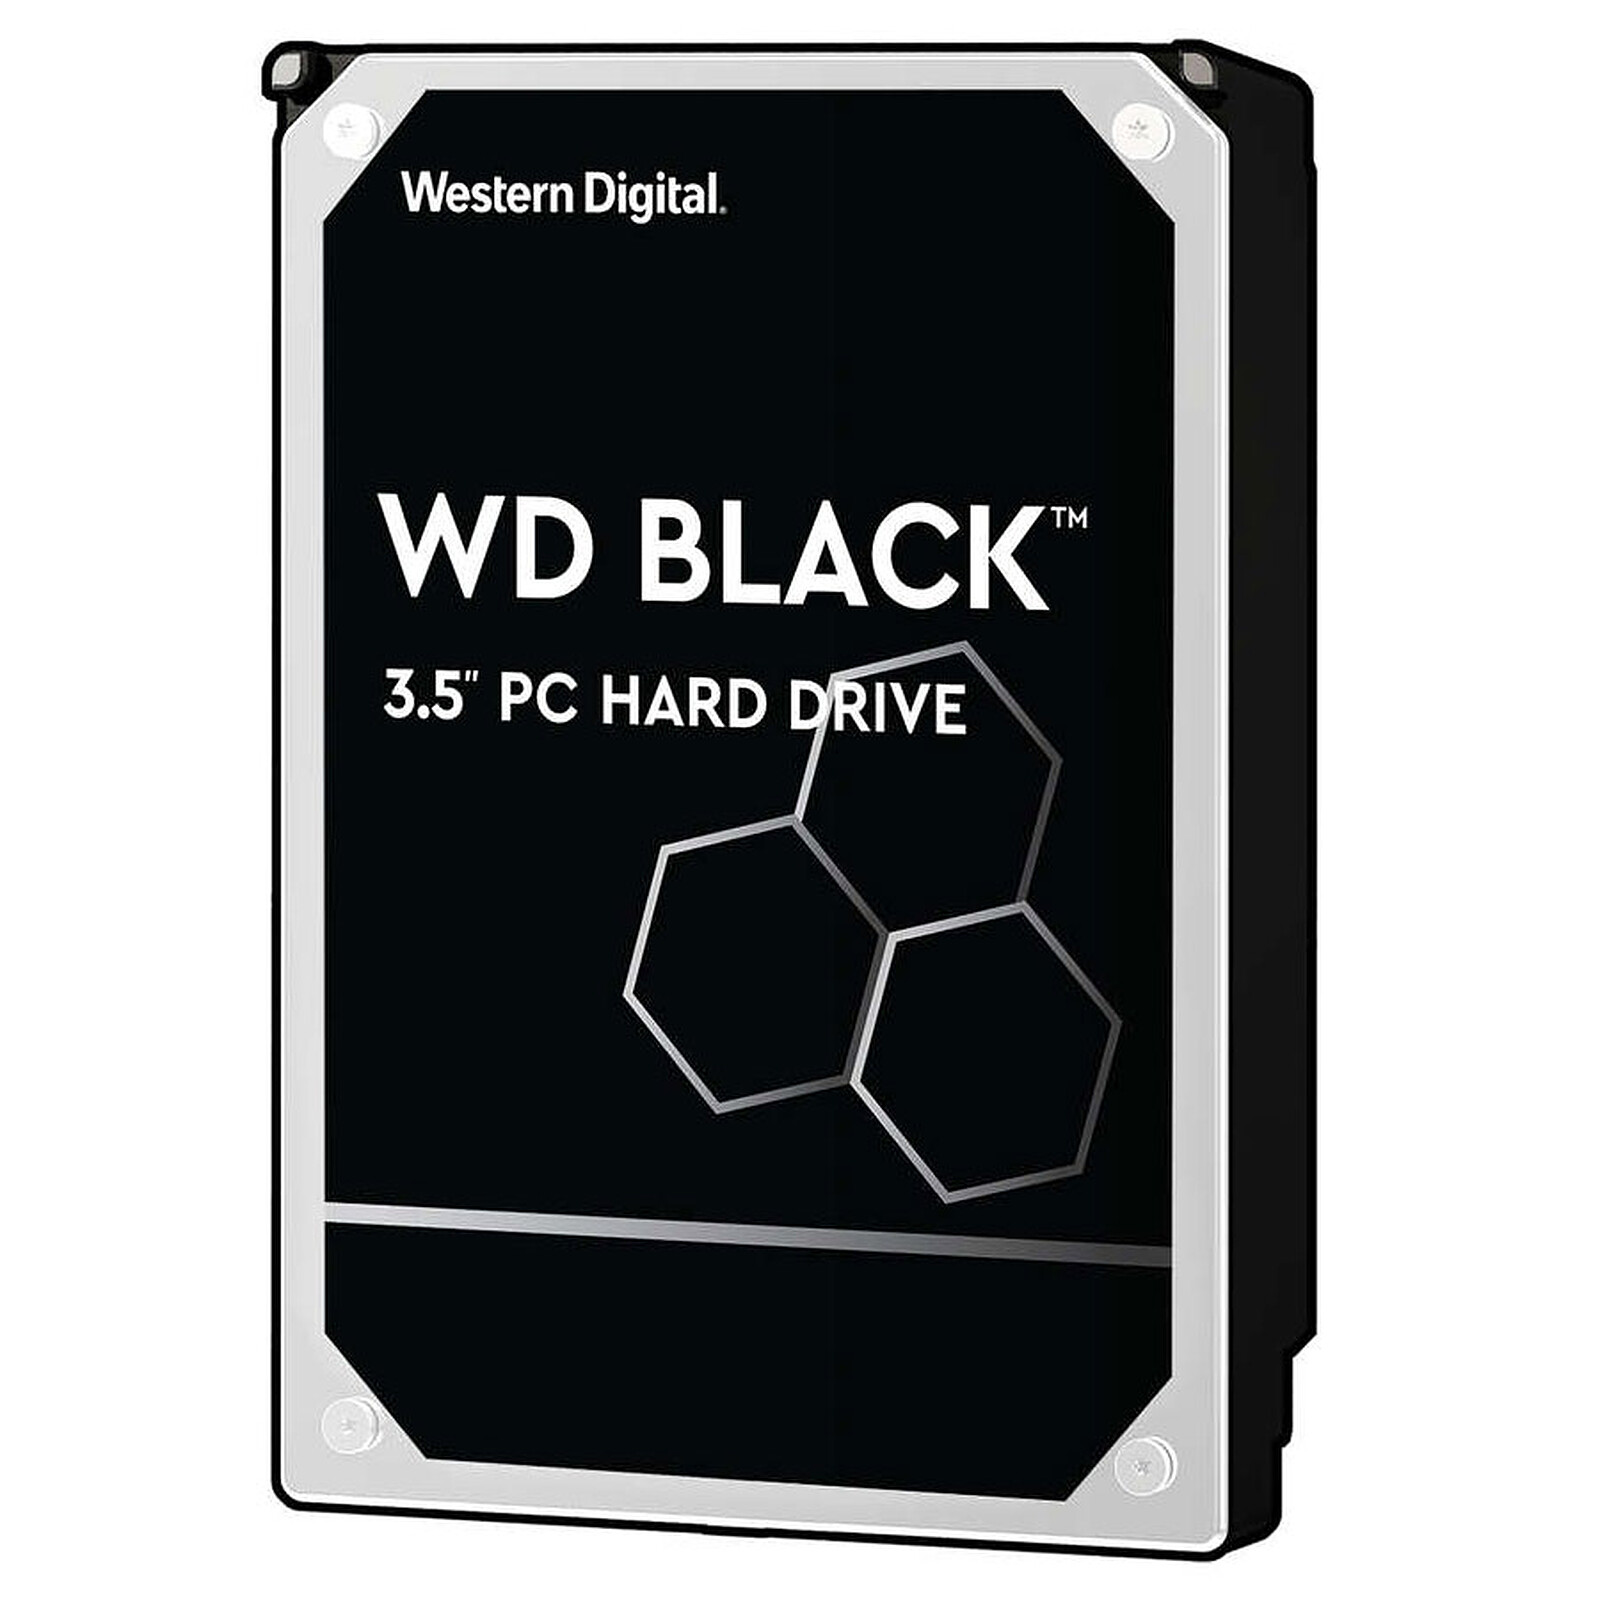 Western Digital Wd Black Desktop 1 To Sata 6gb S Disque Dur Interne Western Digital Sur Ldlc